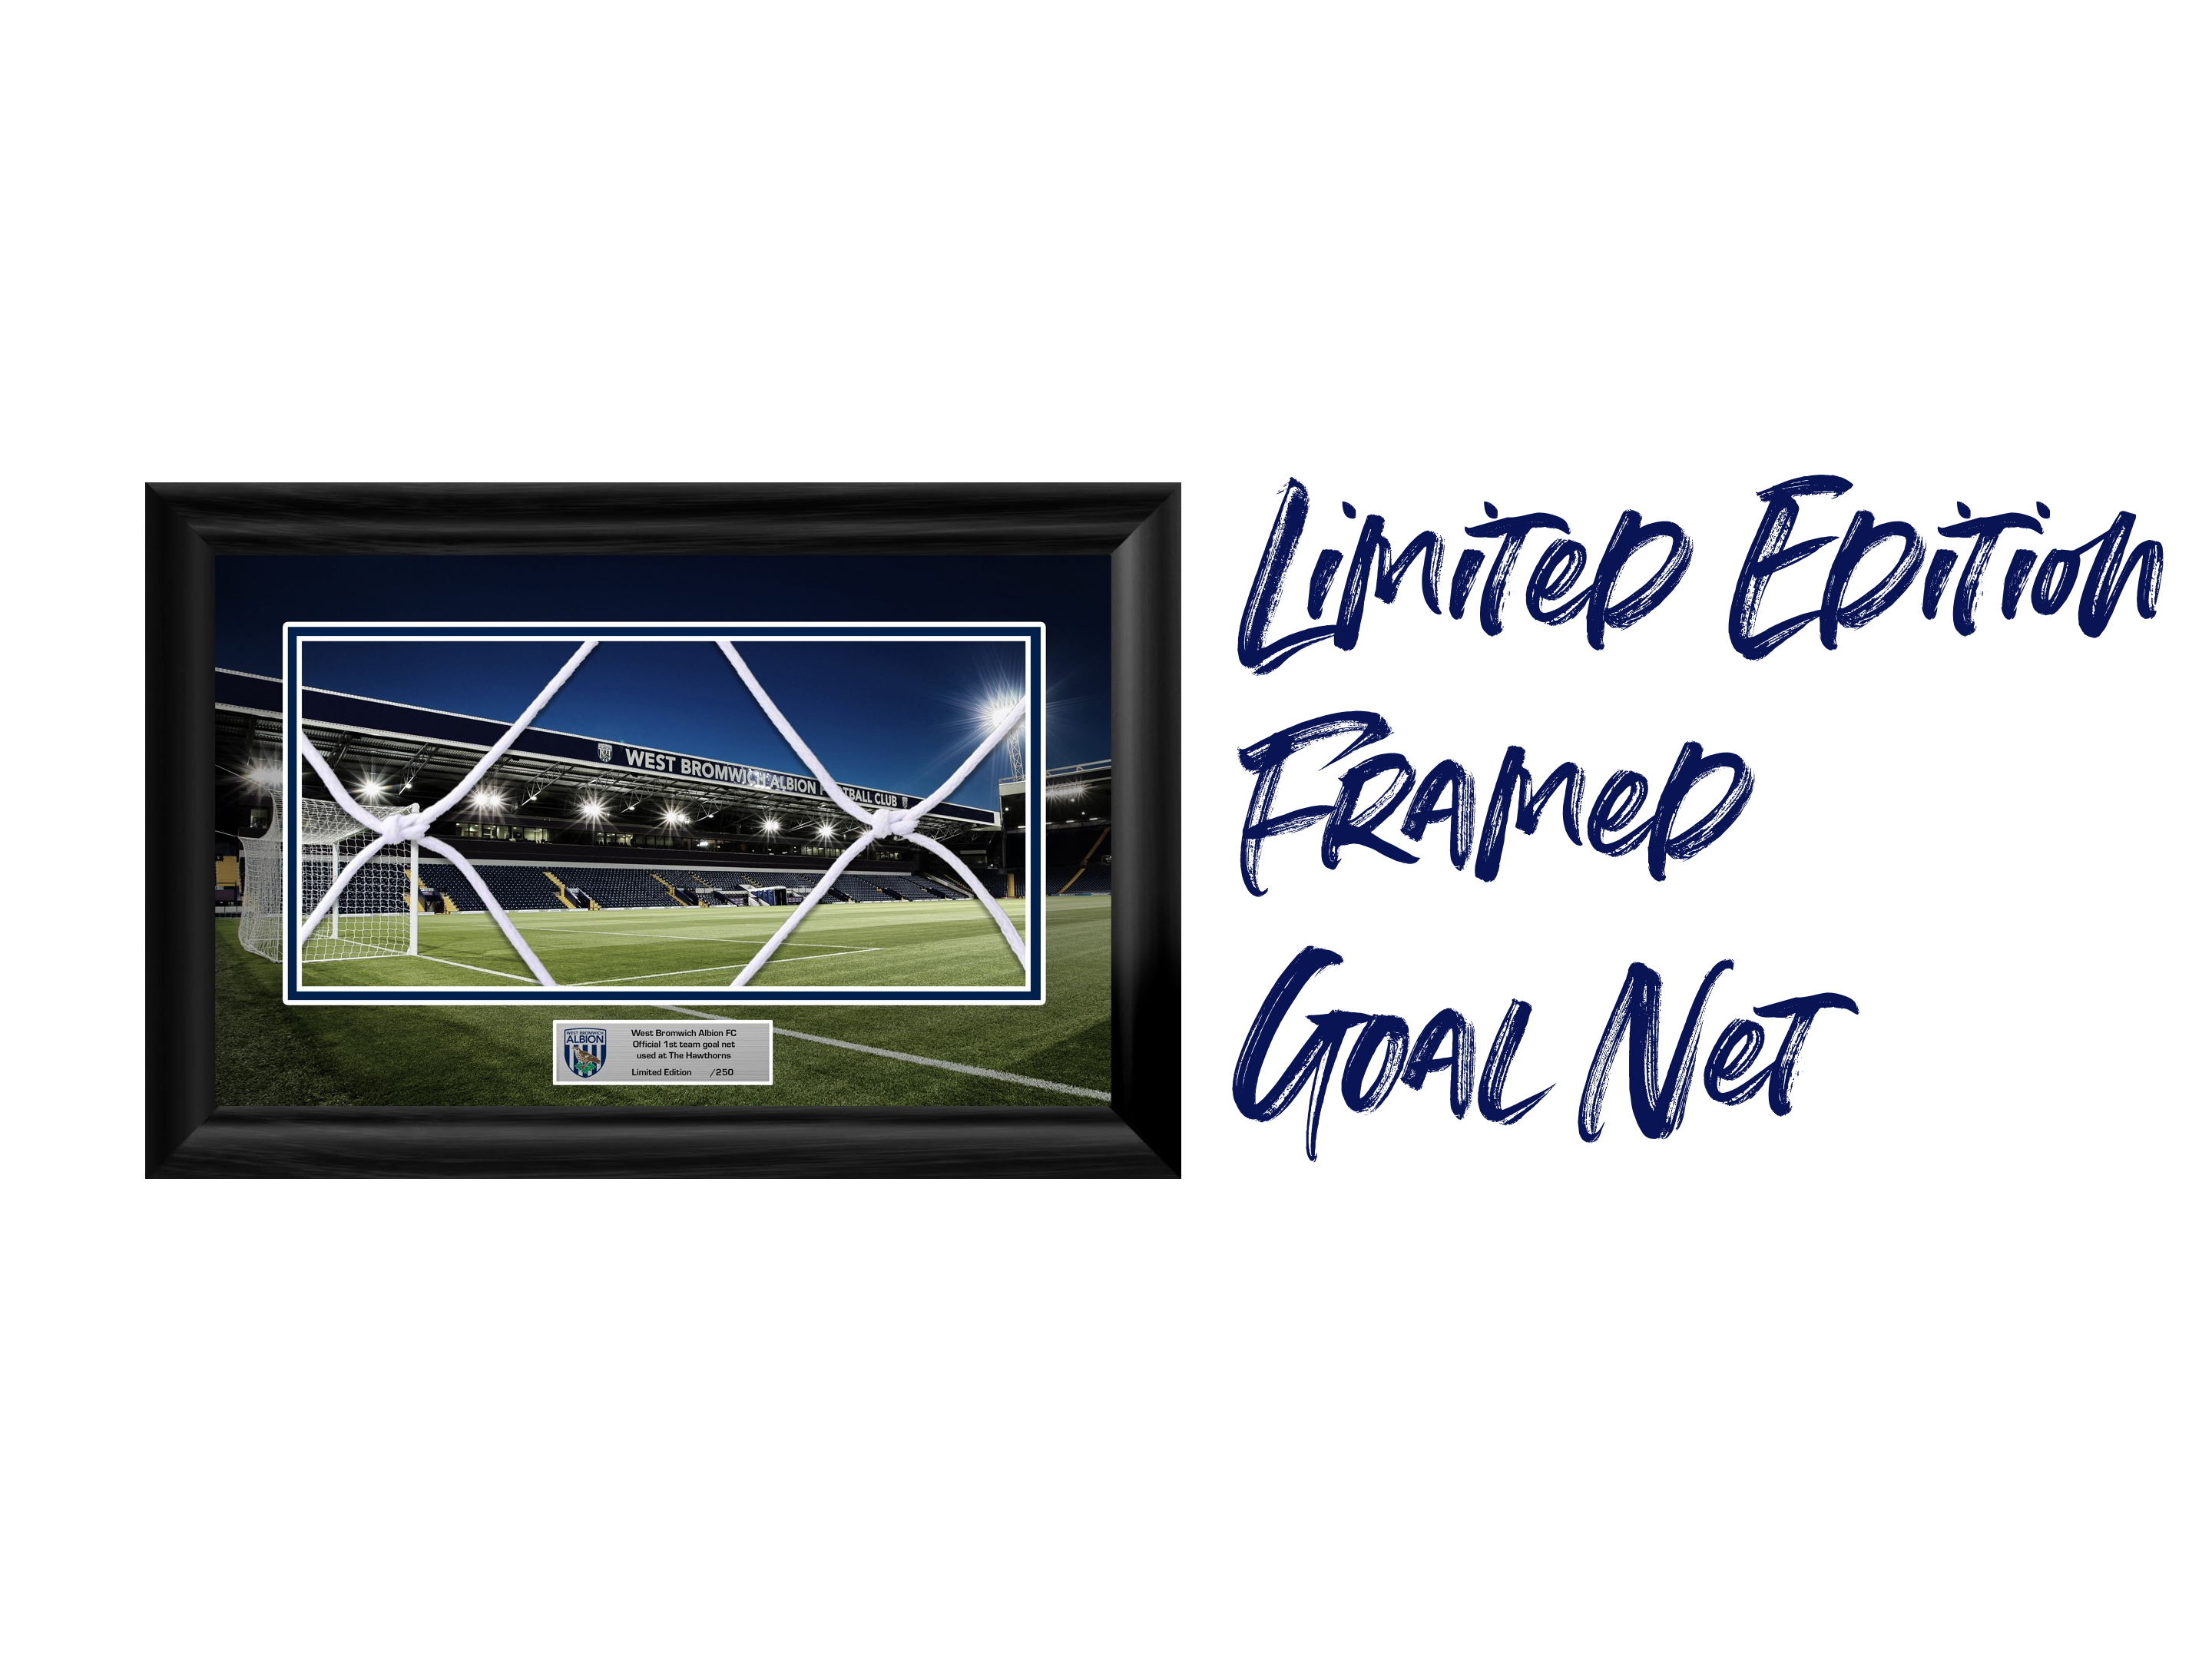 Limited Edition Framed Goal Net